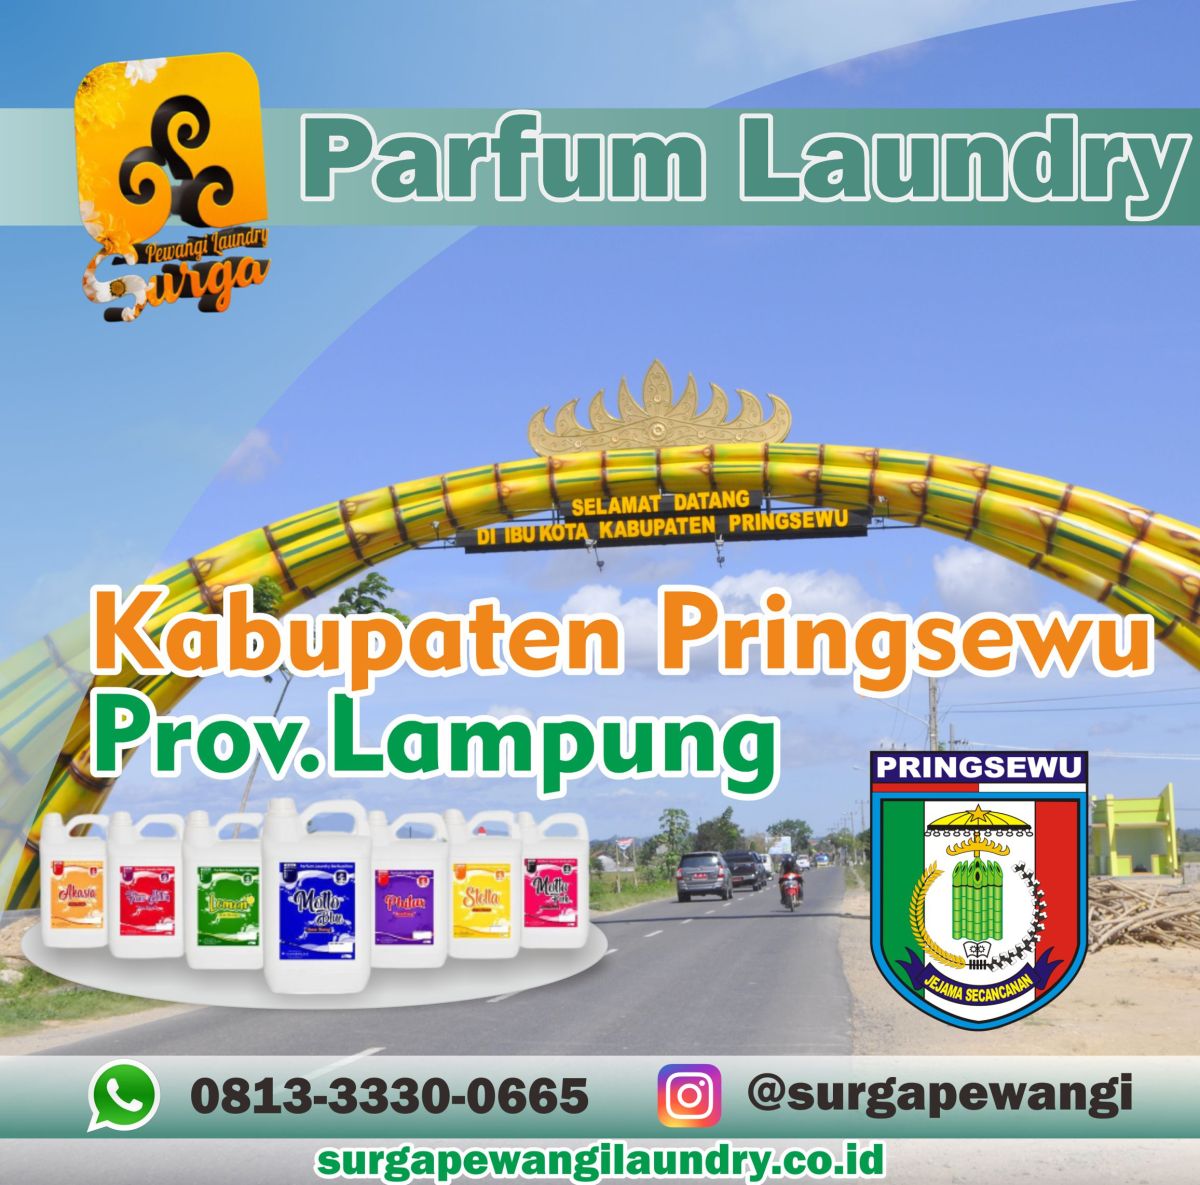 Parfum Laundry Kabupaten Pringsewu, Prov Lampung